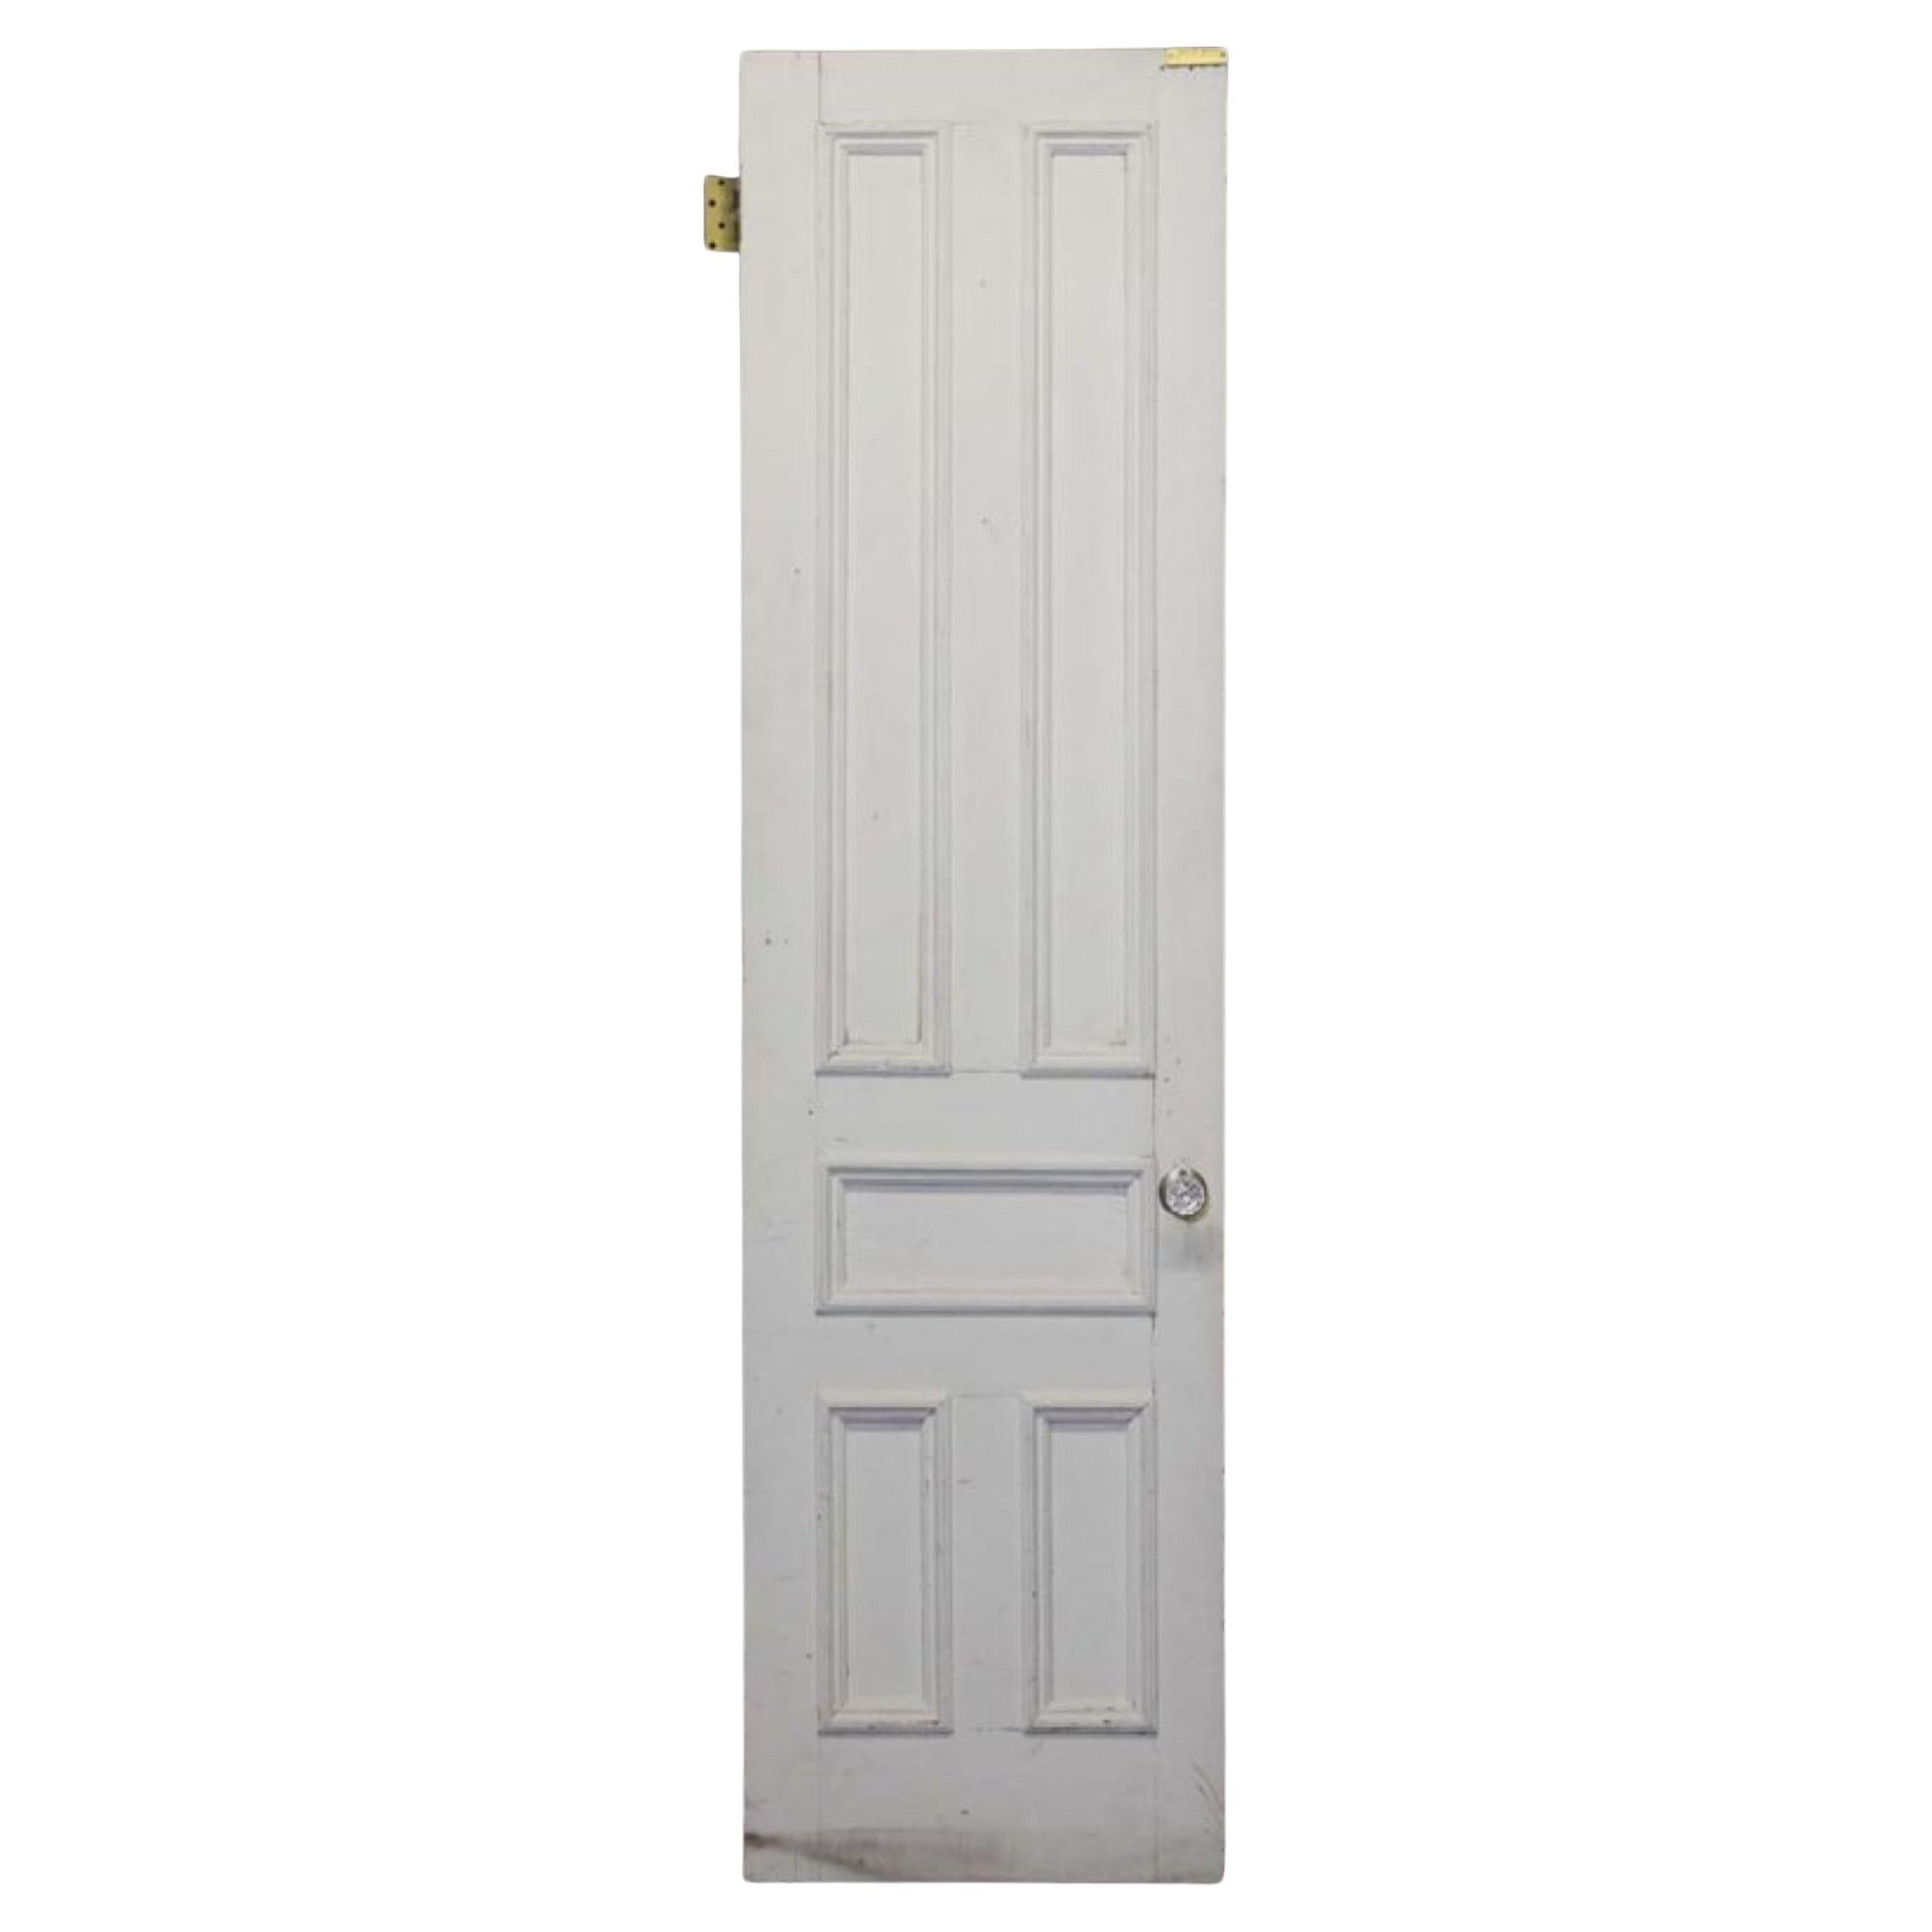 Antique Narrow White Wood Door 5 Panes W/ Hardware